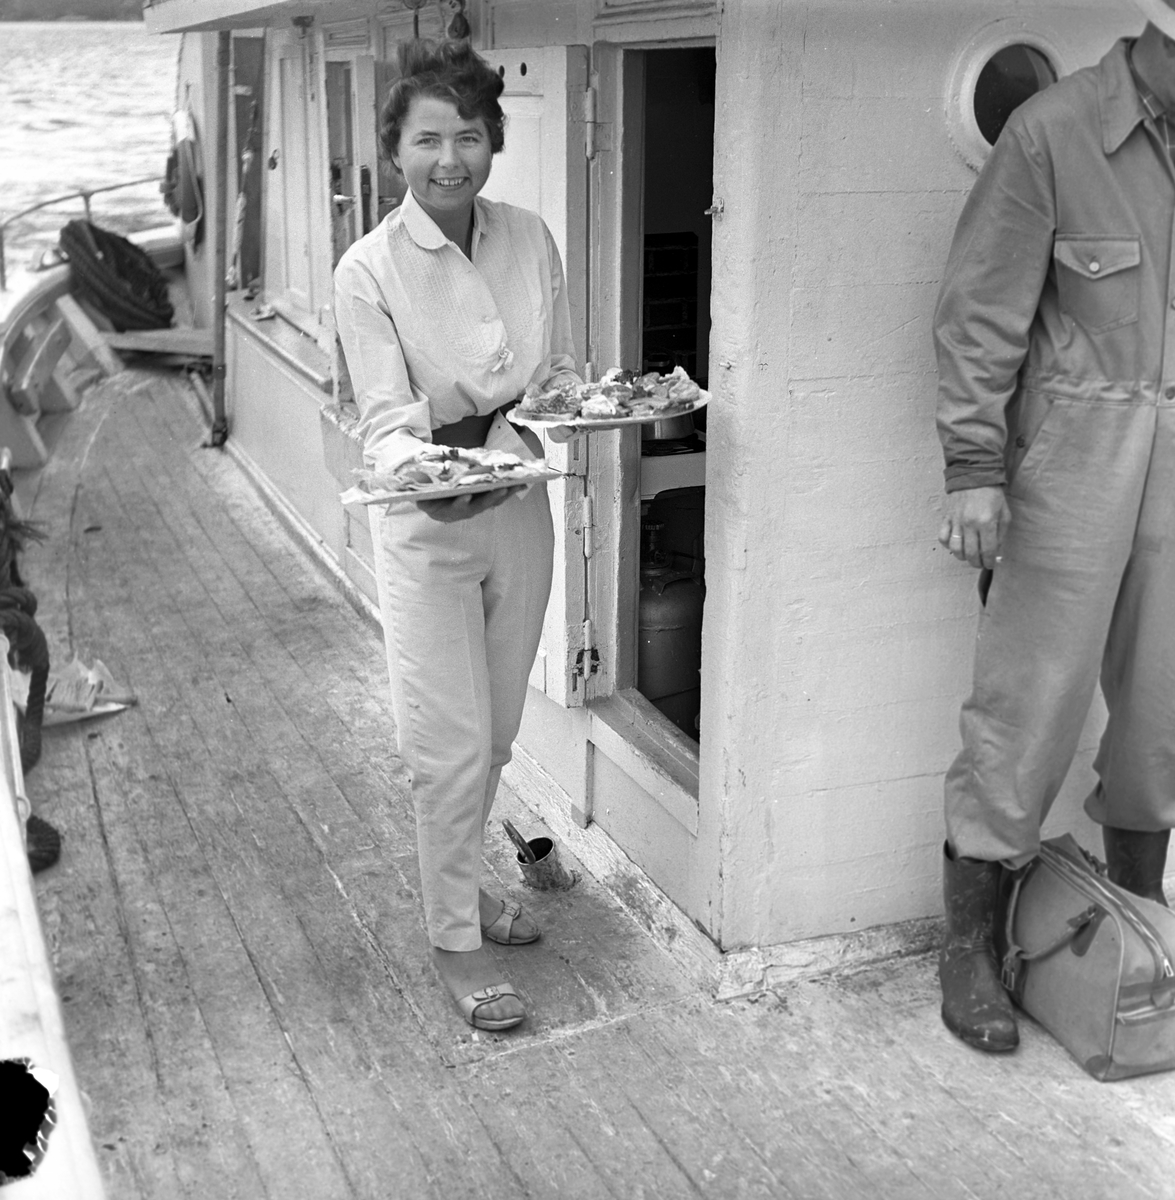 Serie. Fiskeskøyta "Barodd" på sightseeing. Fotografert 14. juni 1961.